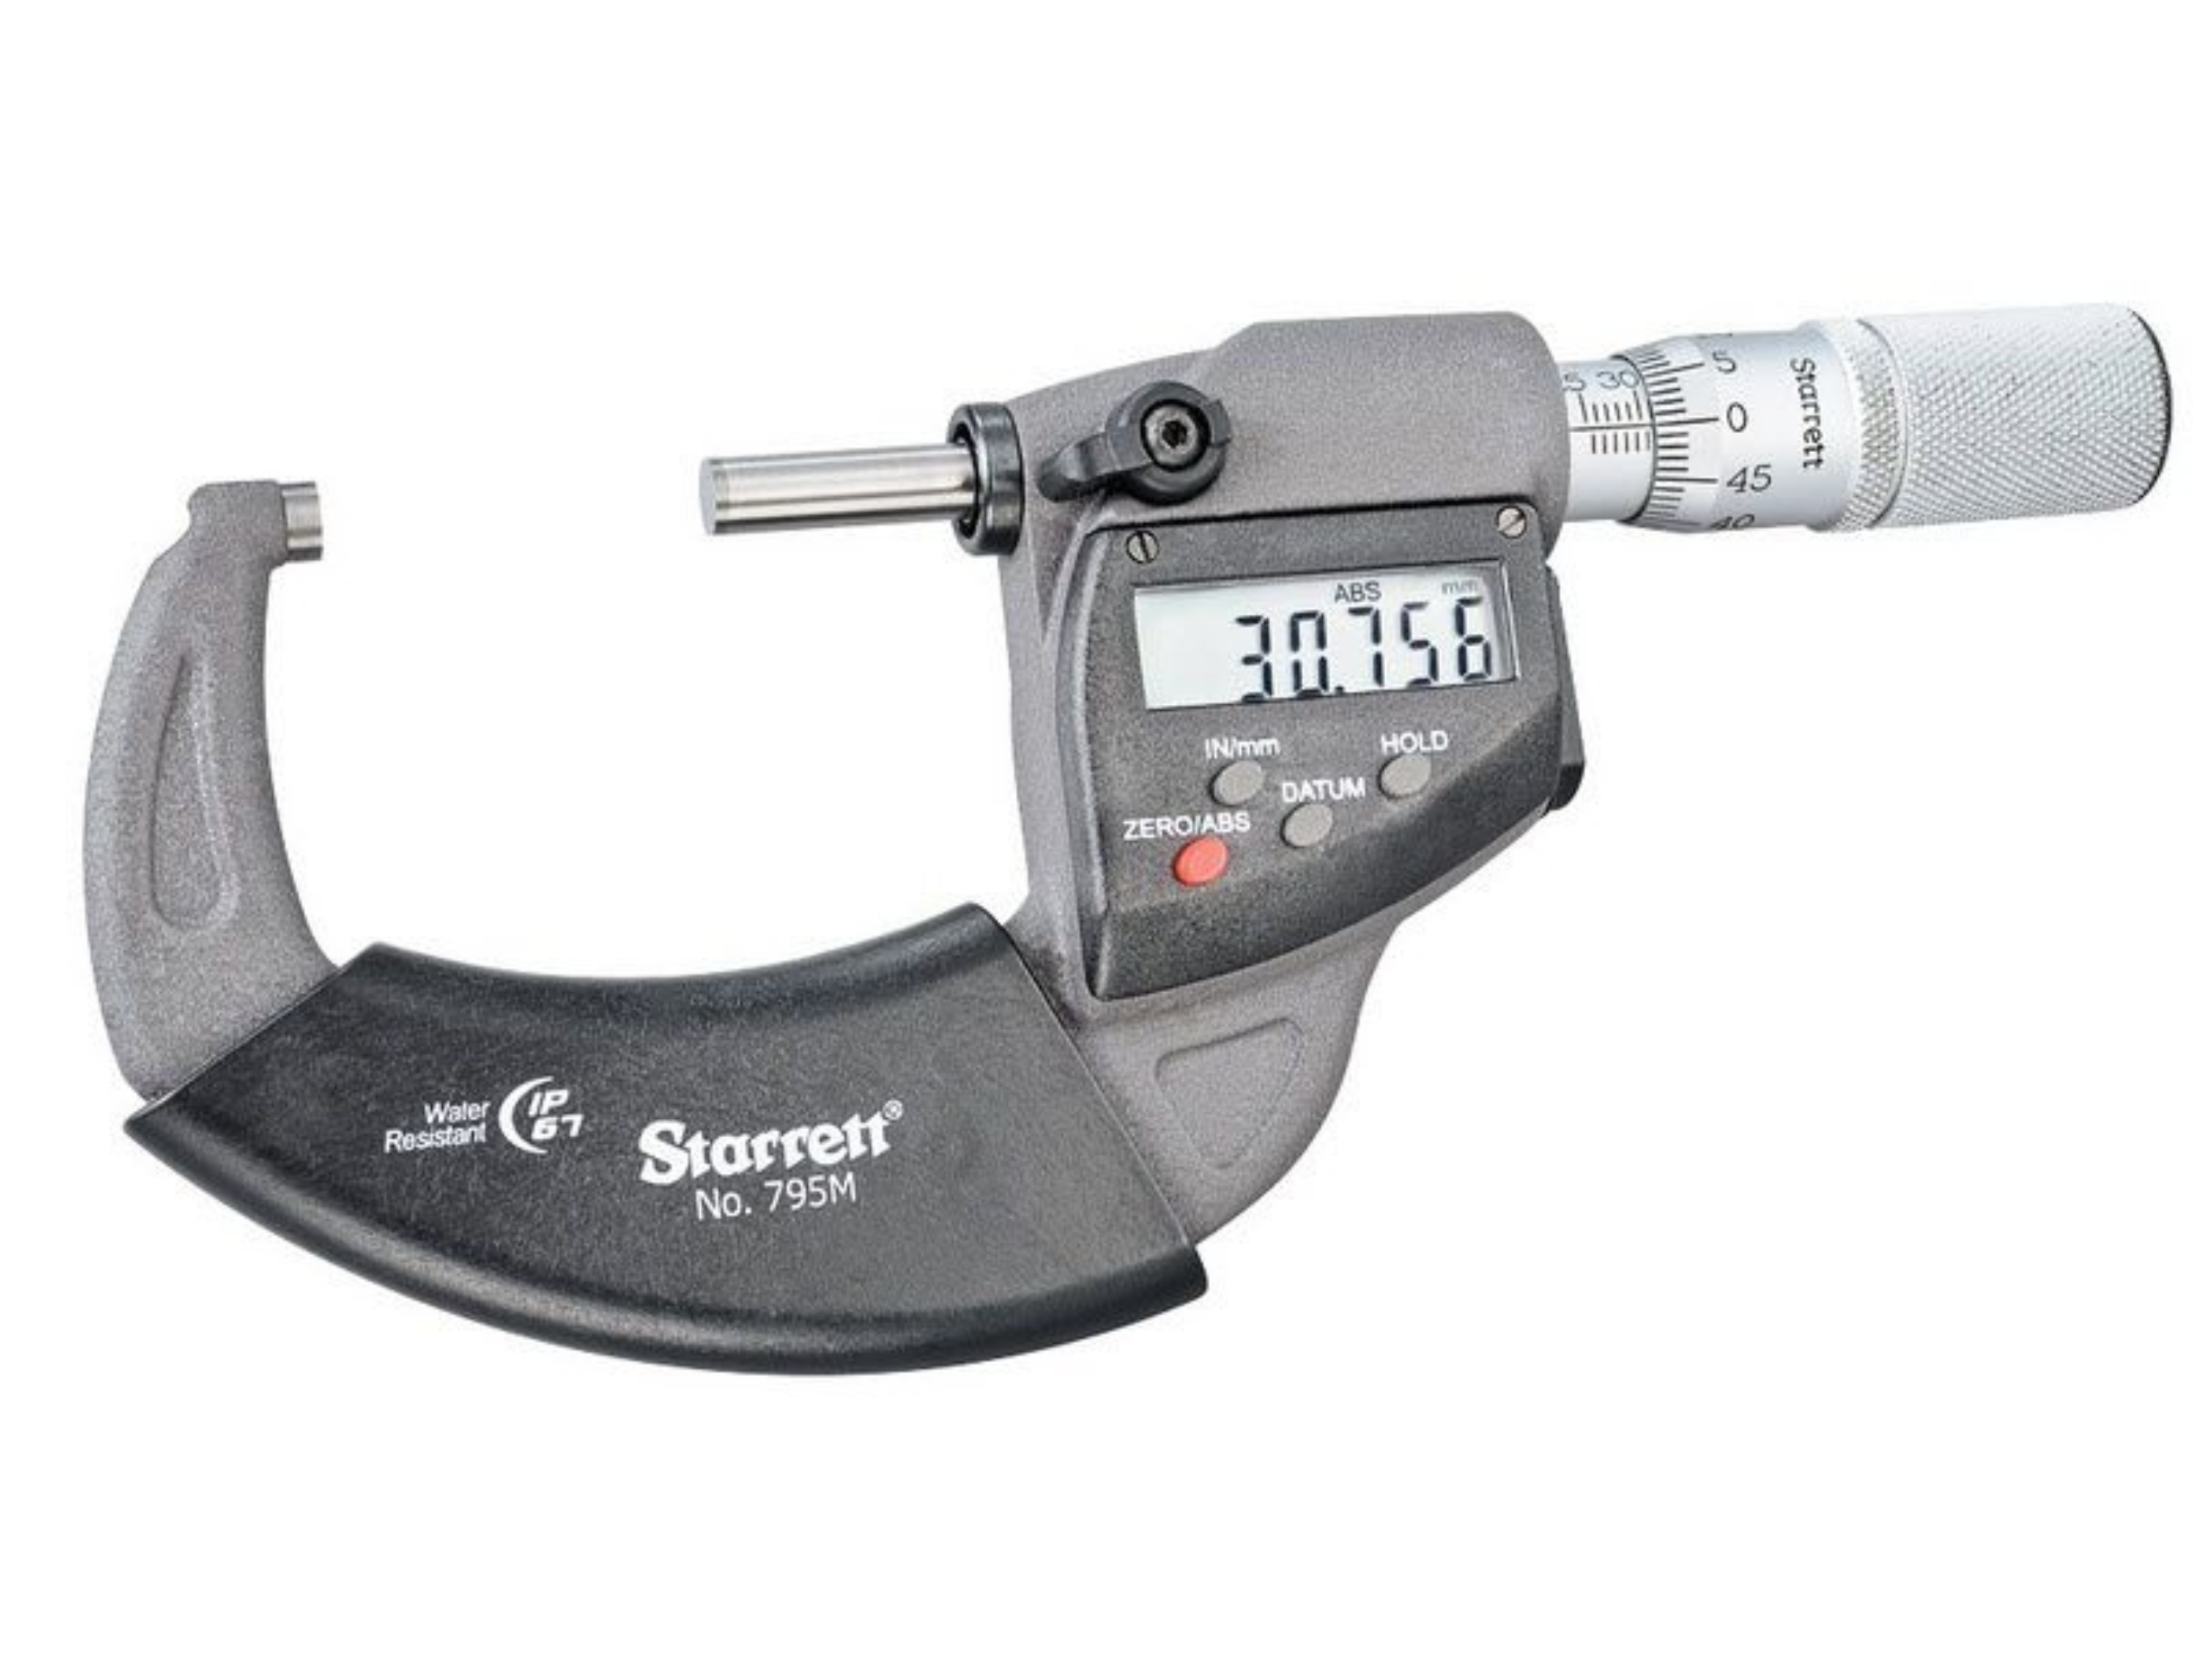 Warehouse Clearance Item: Digital Micrometer 25-50mm (1-2") IP67